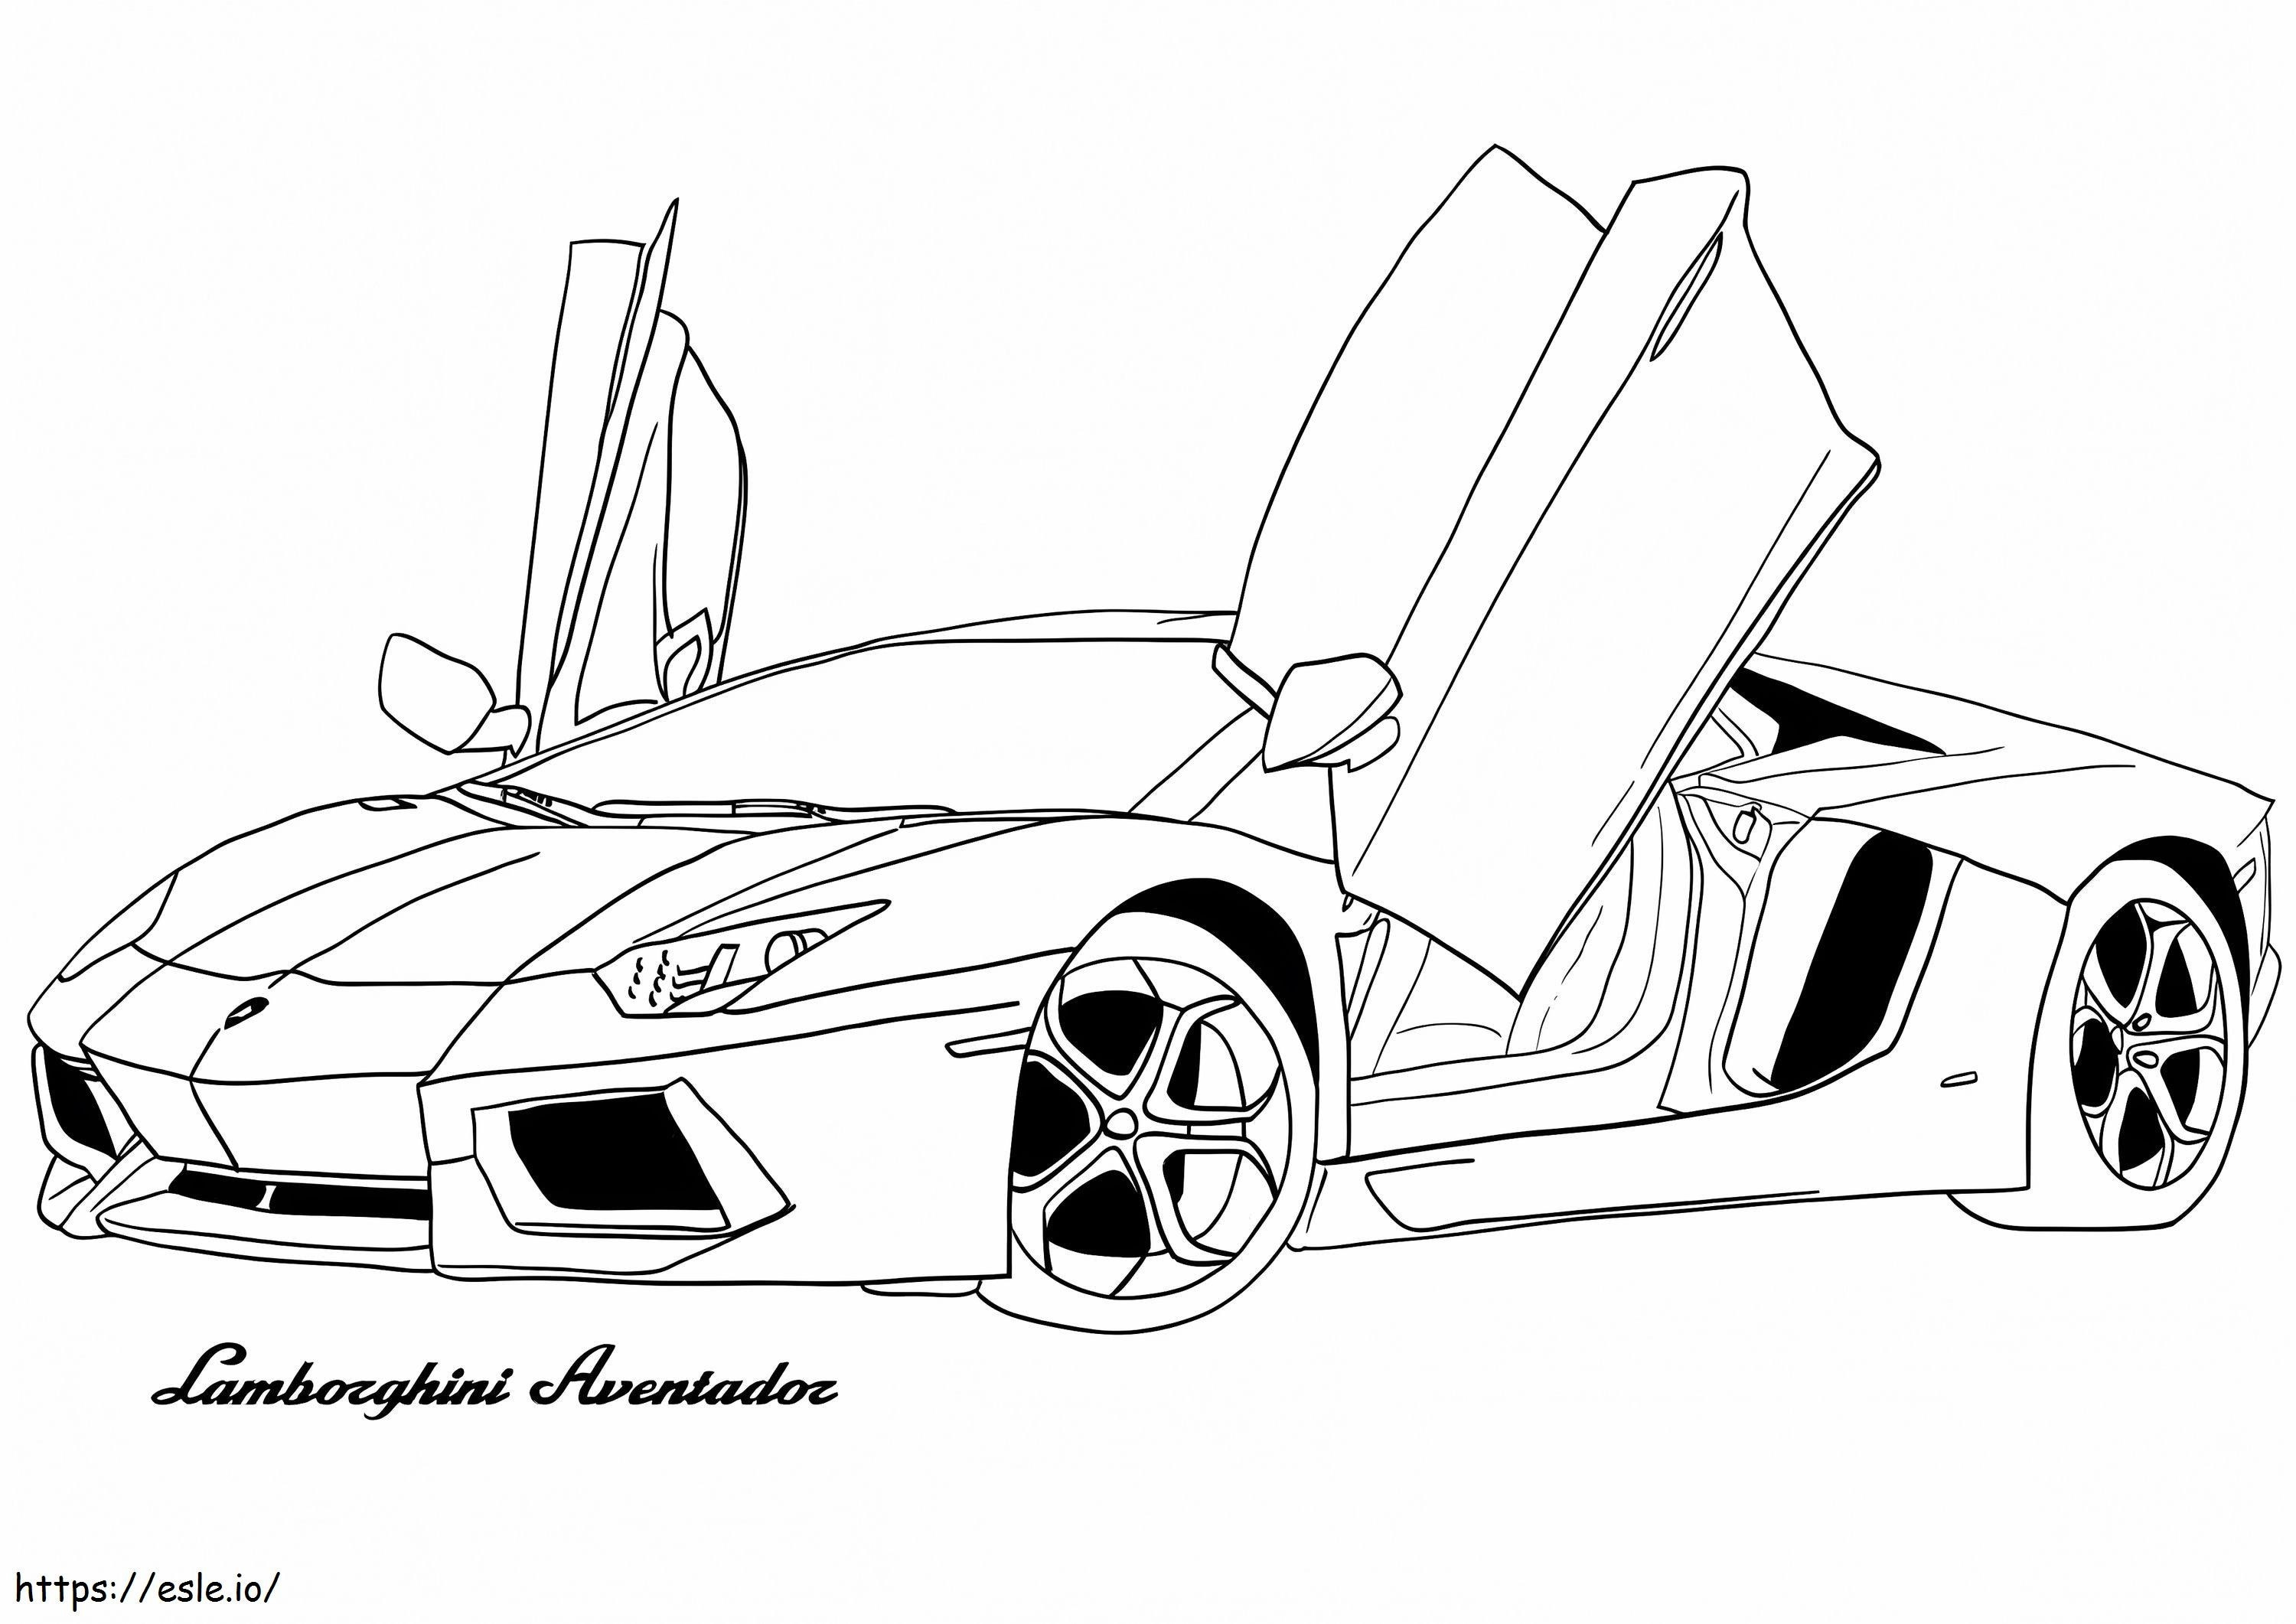 Lamborghini Aventador boyama